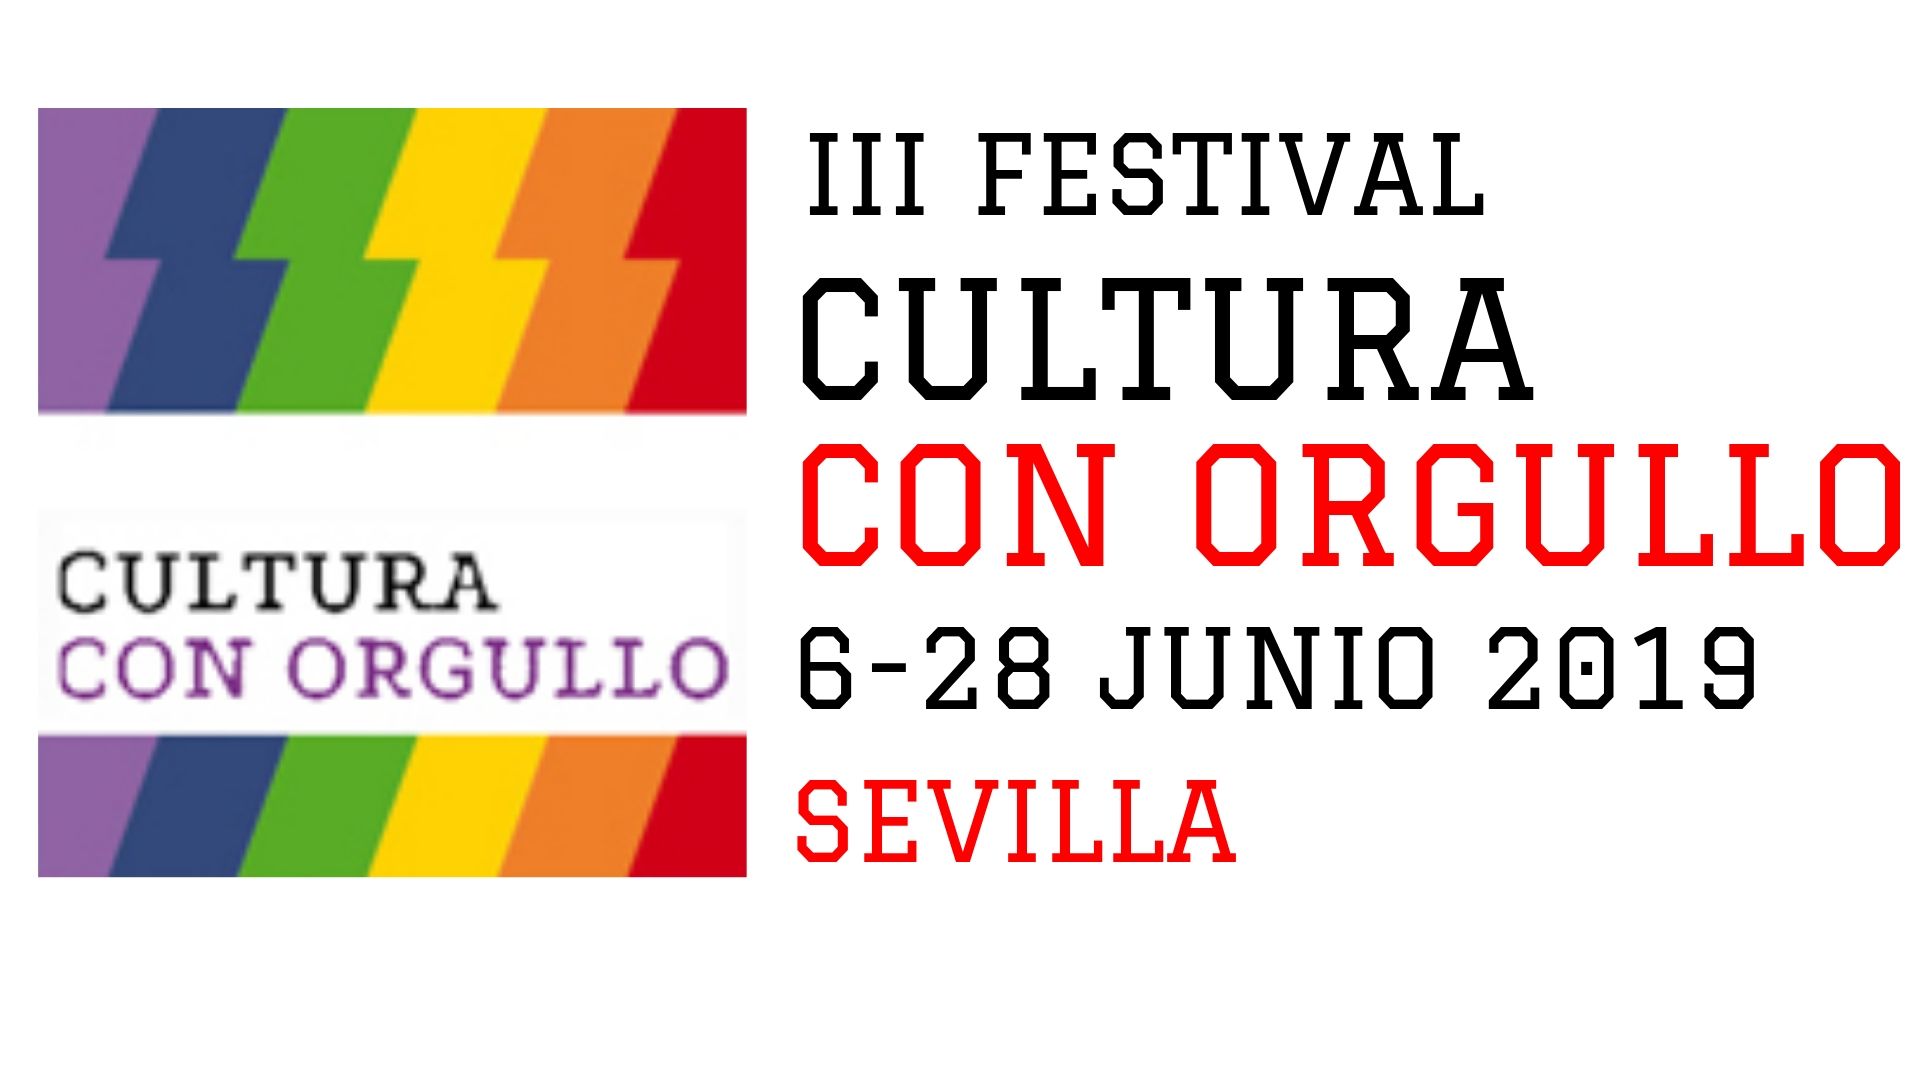 III Festival Cultura con Orgullo en Sevilla - Programación